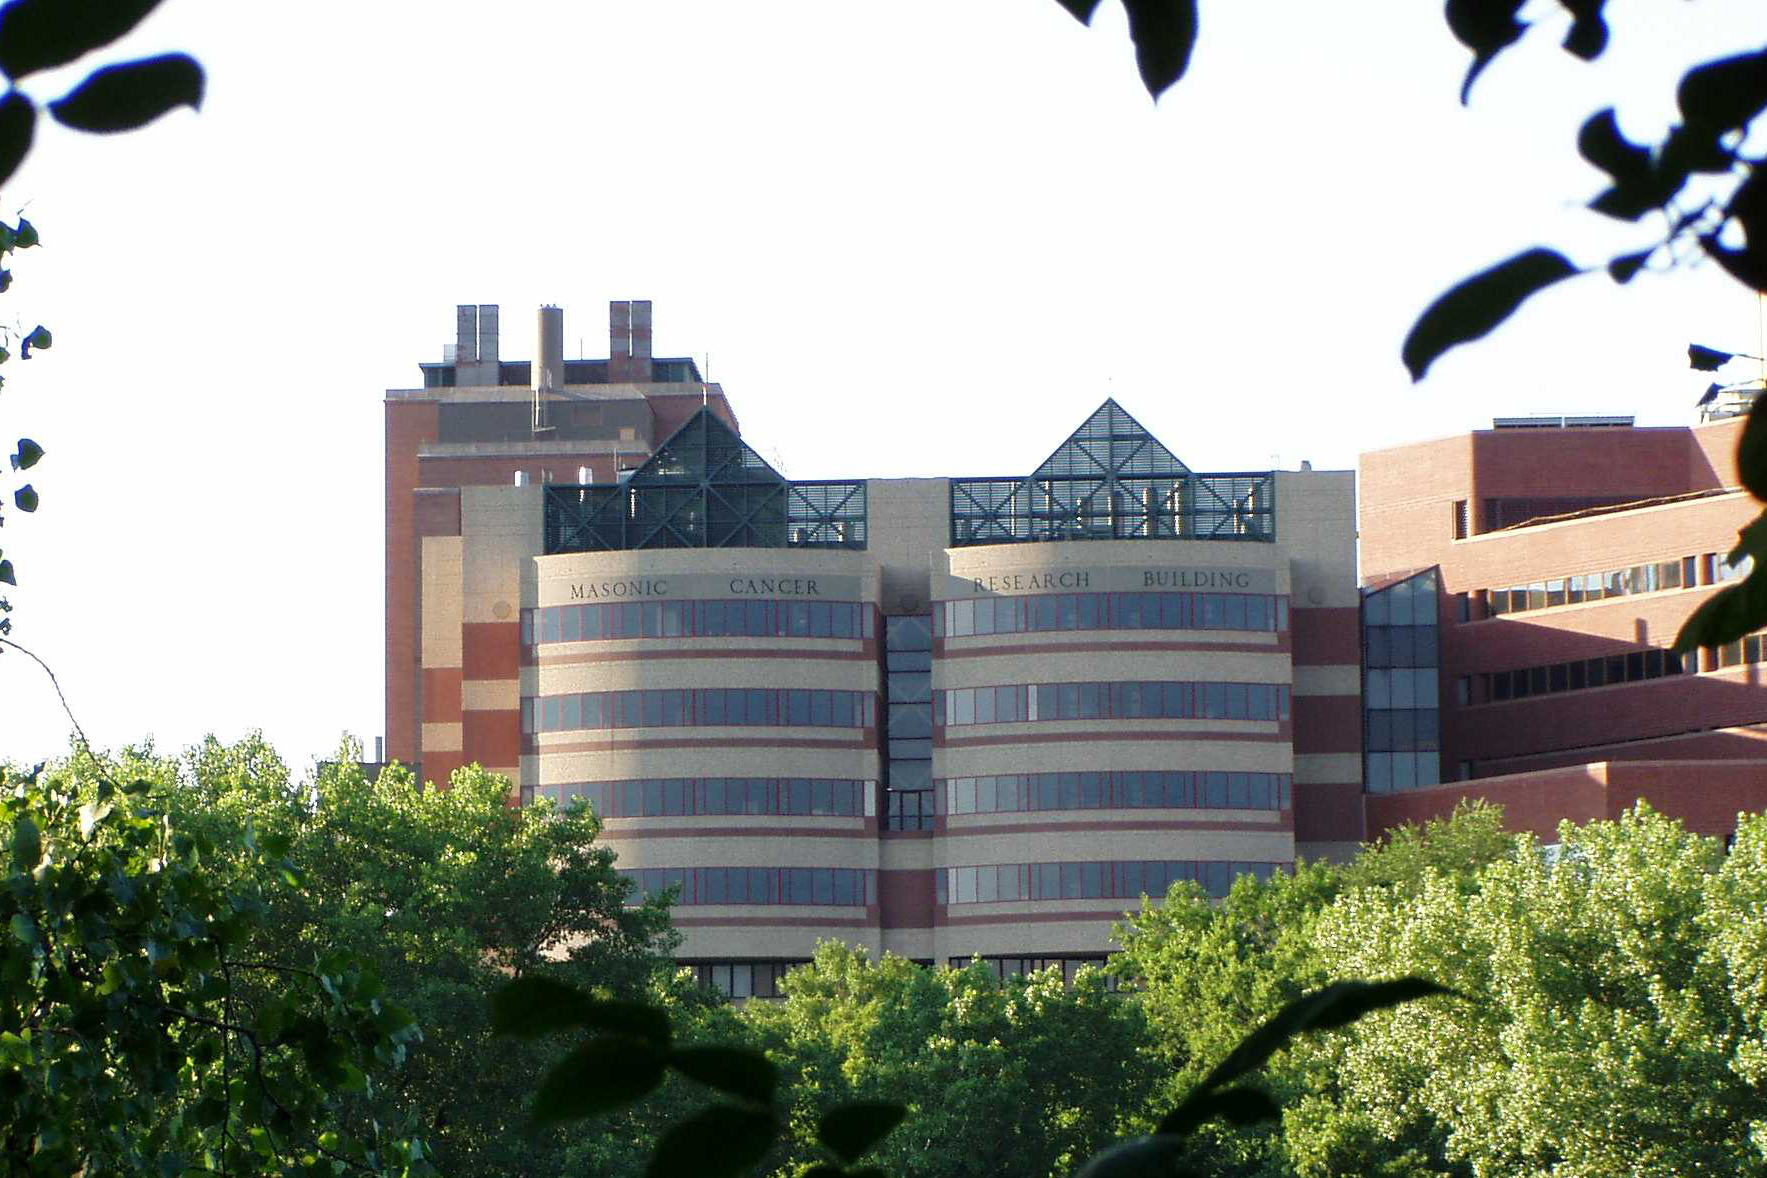 Masonic Cancer Center